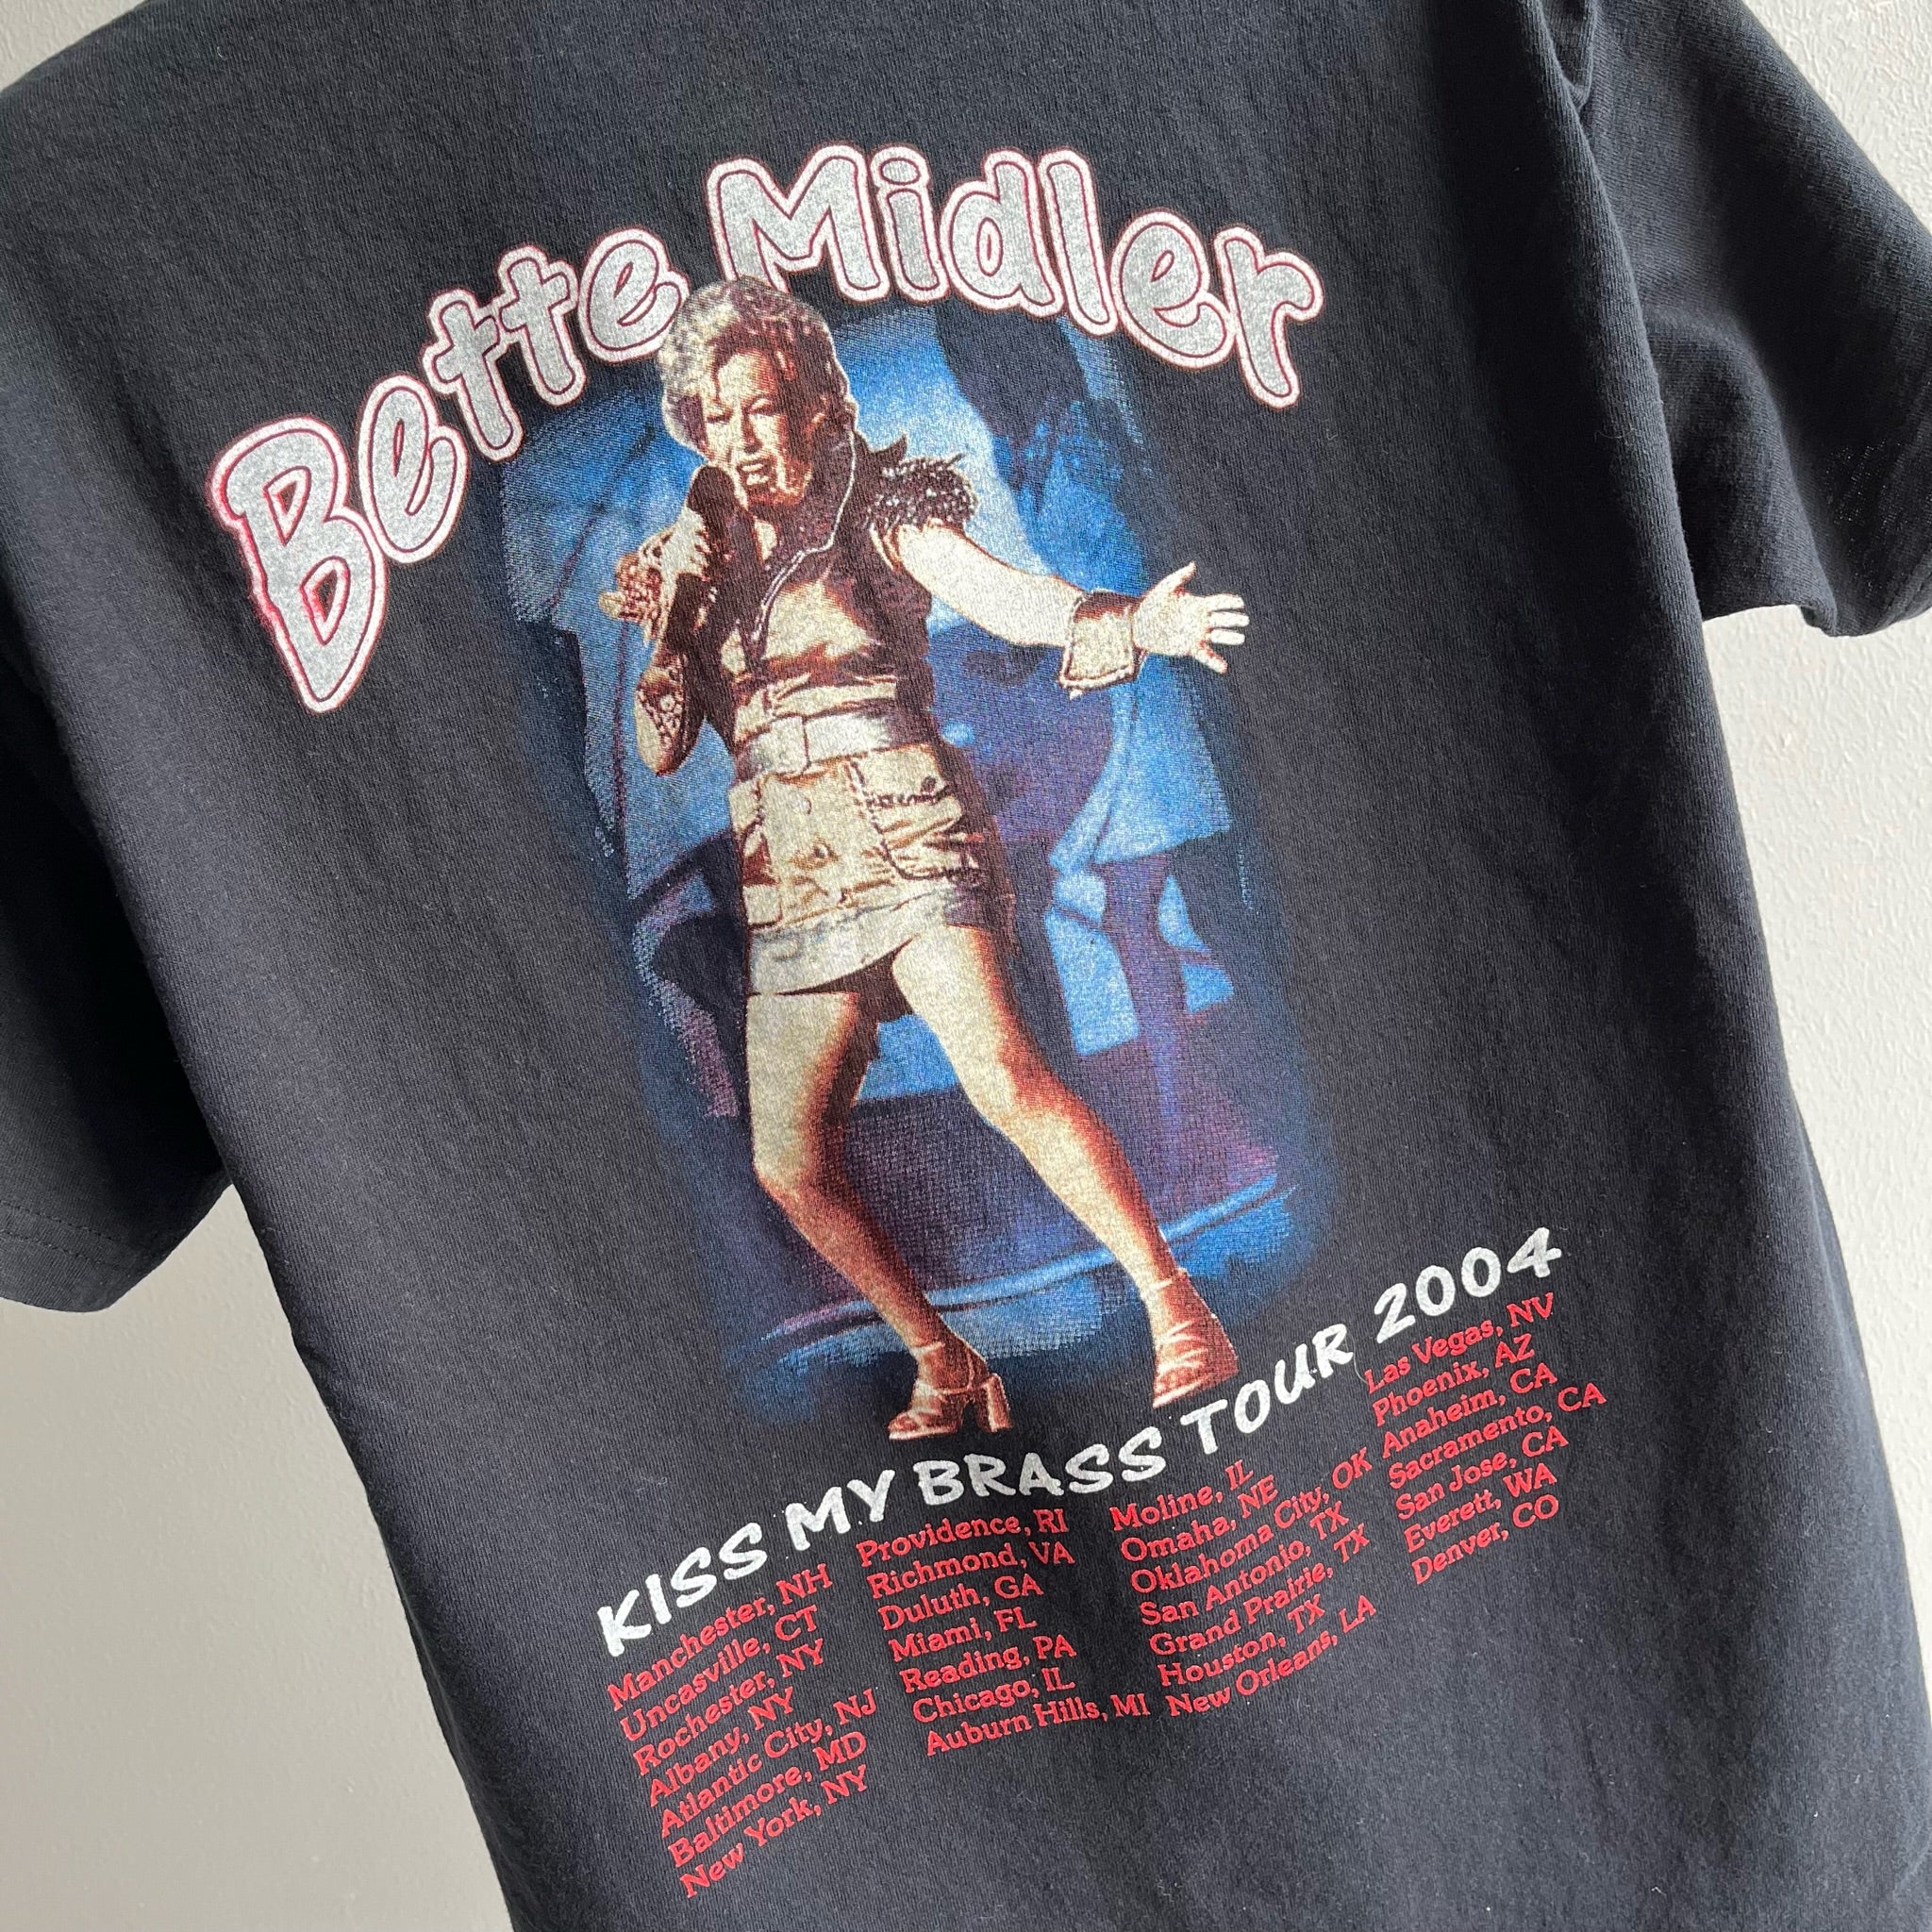 2004 Bette Midler Tour T-Shirt - Wowza